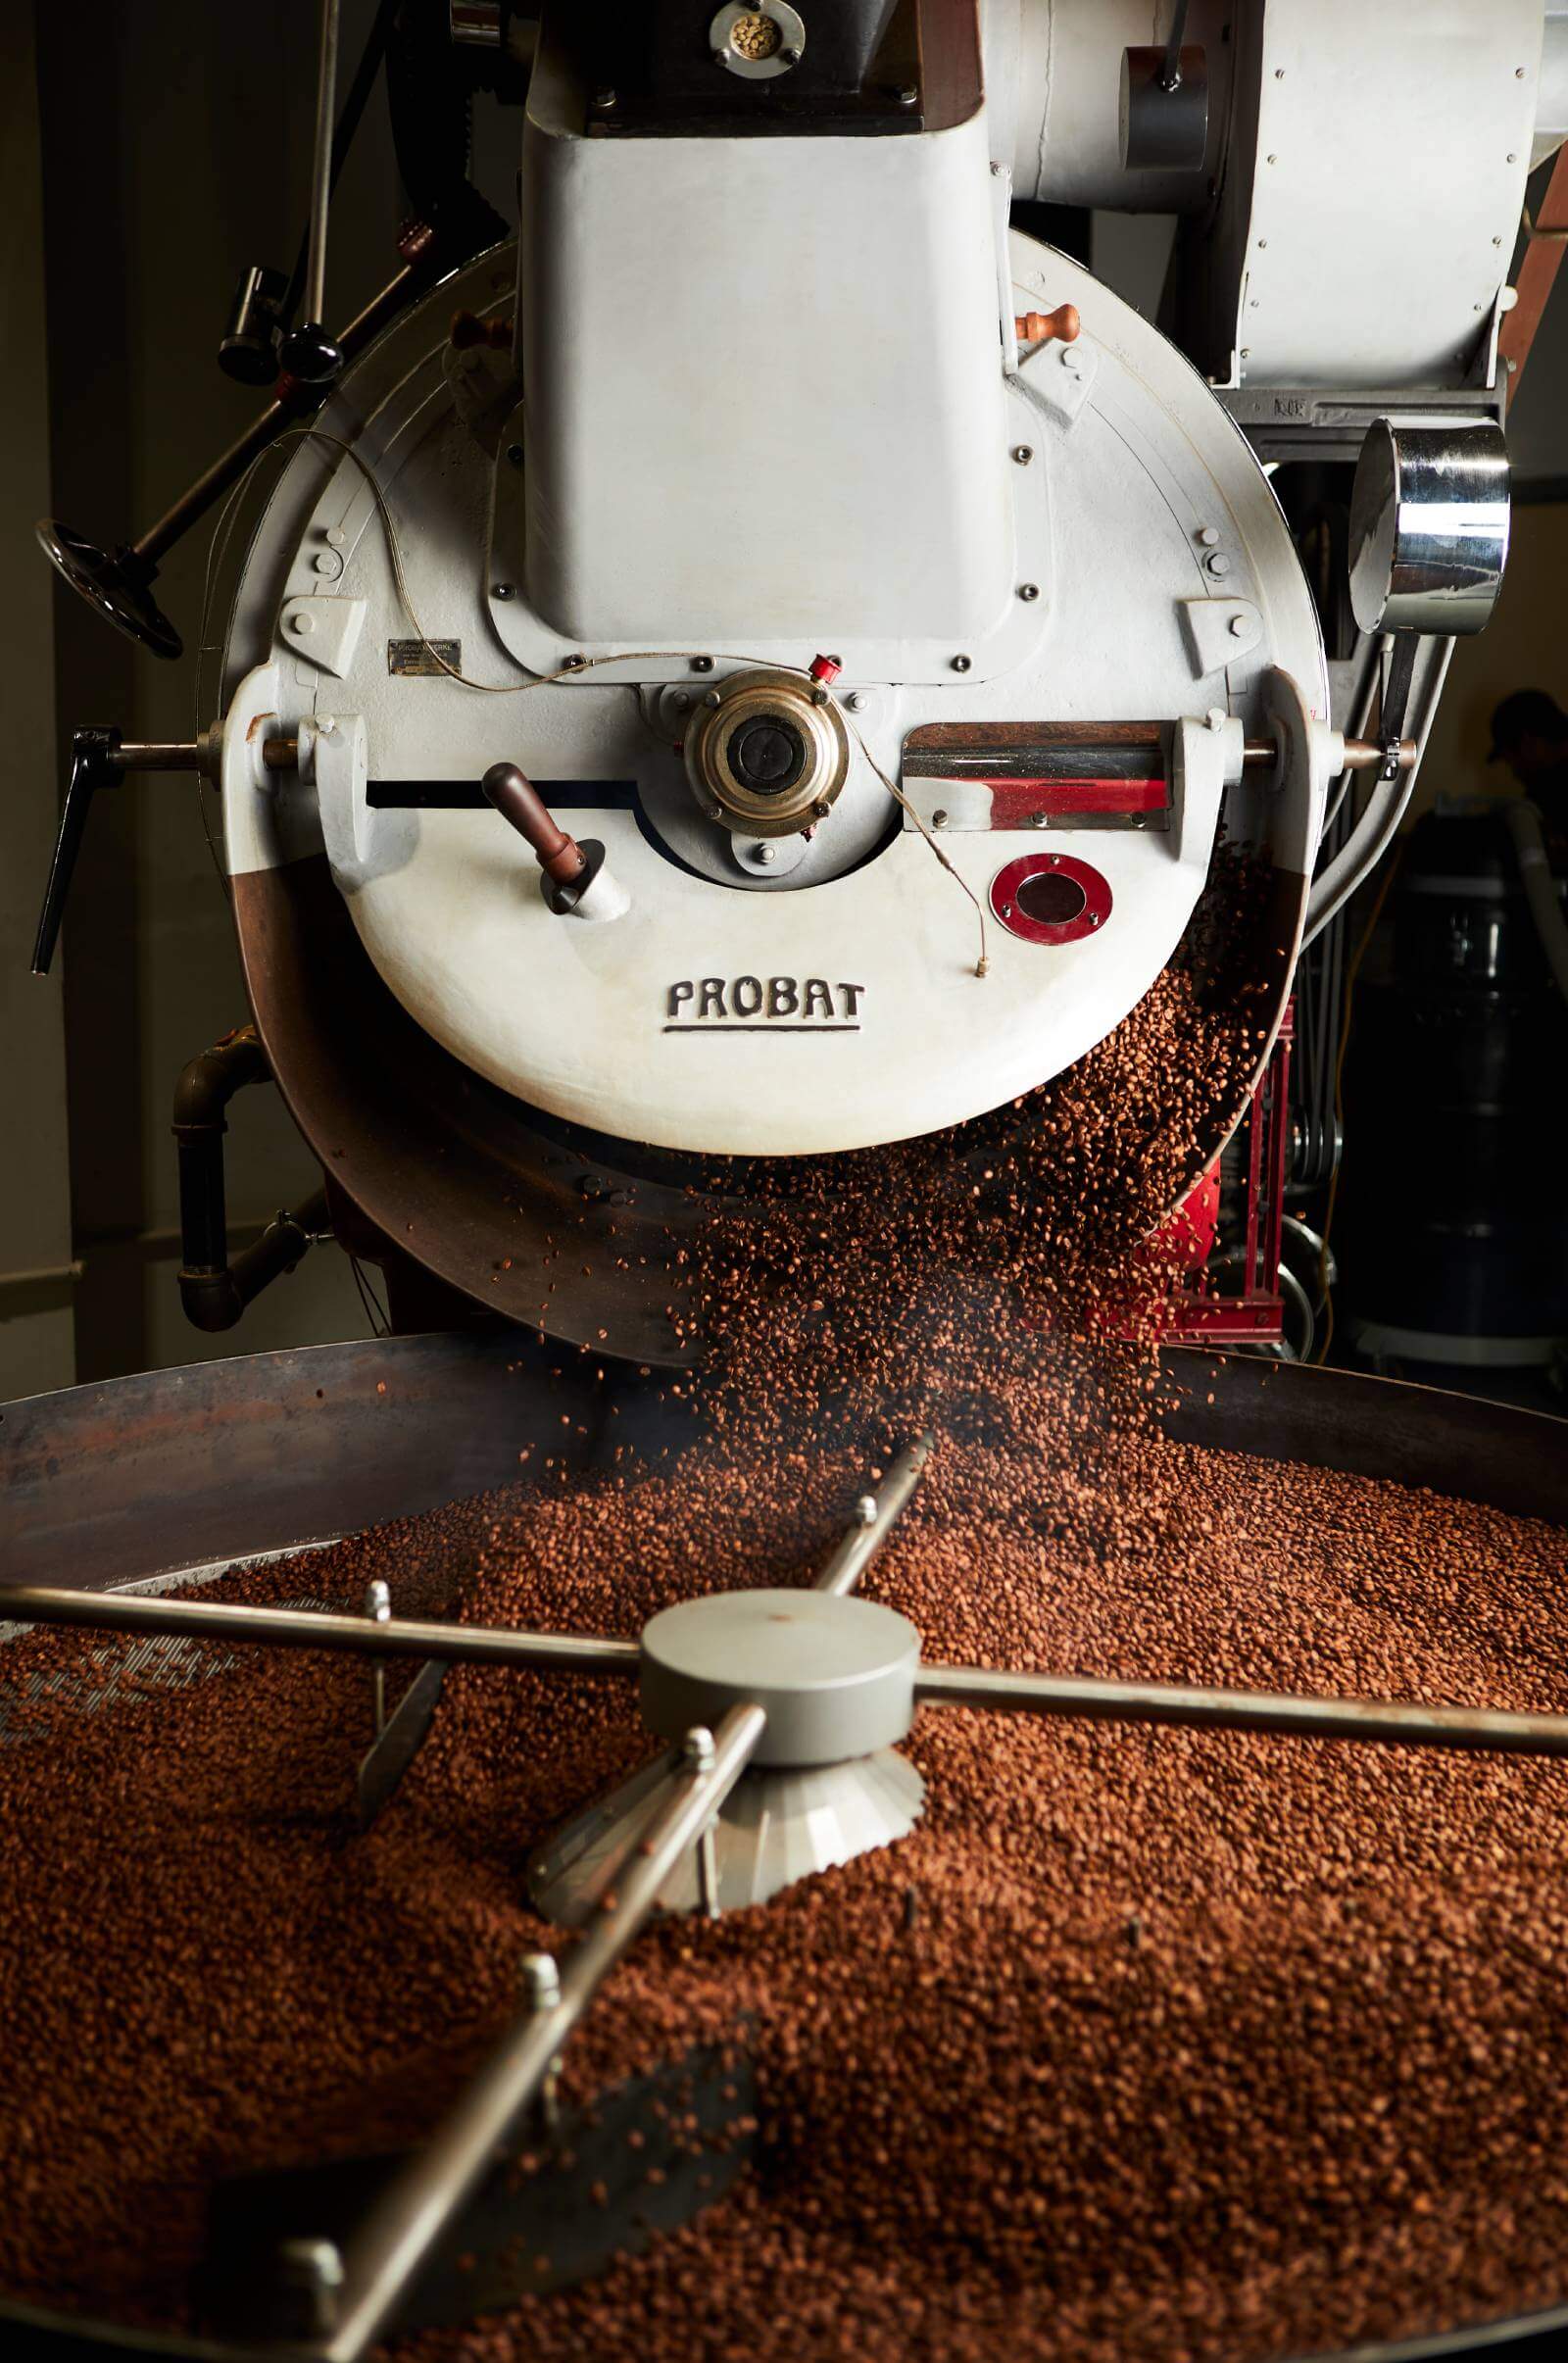 A Coffee roasting machine